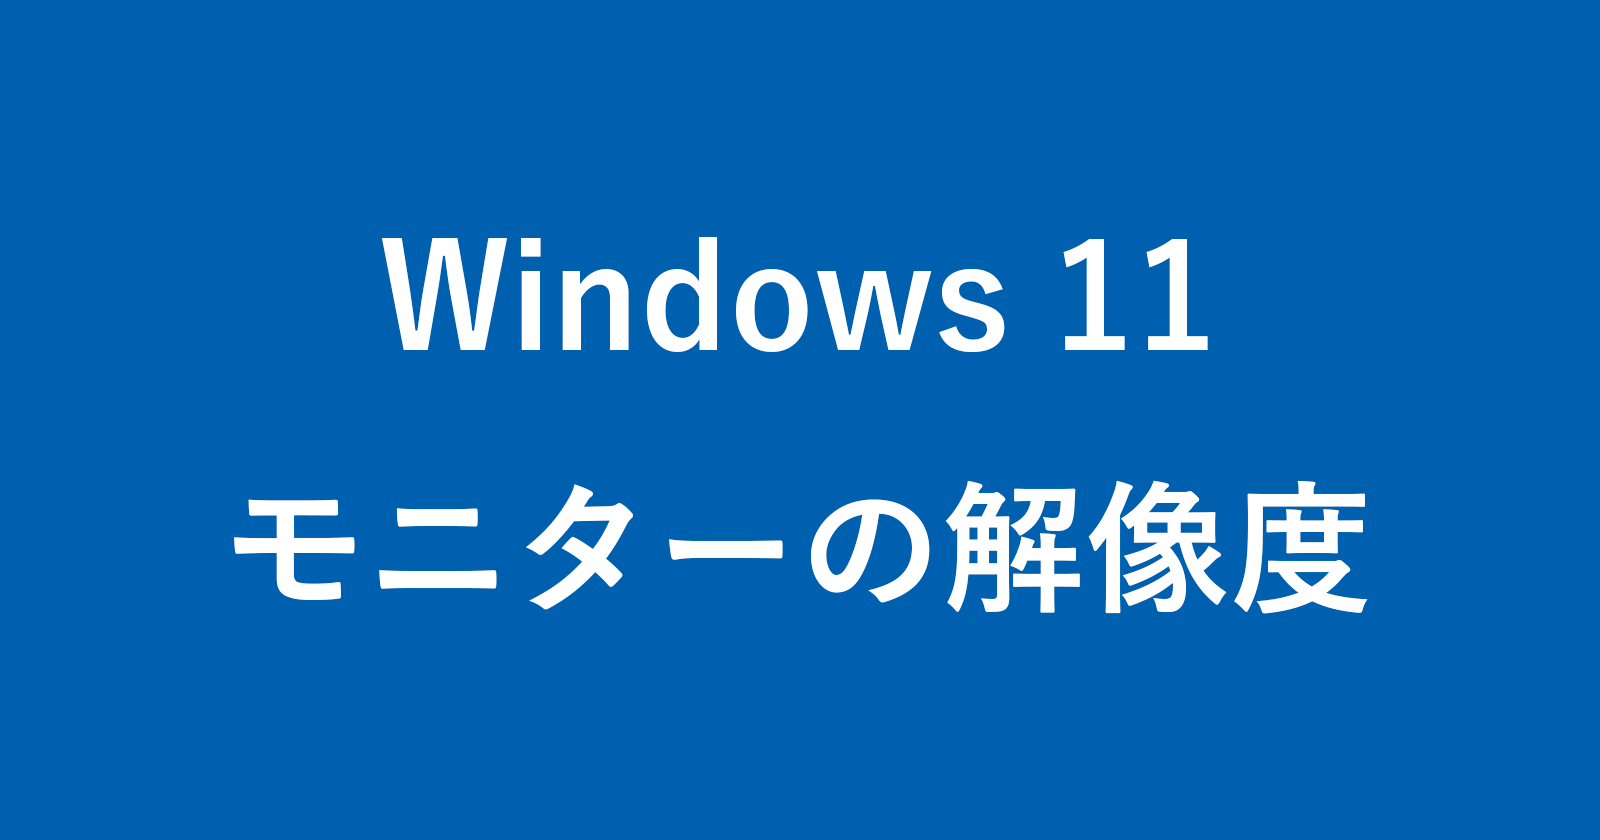 windows 11 change screen resolution